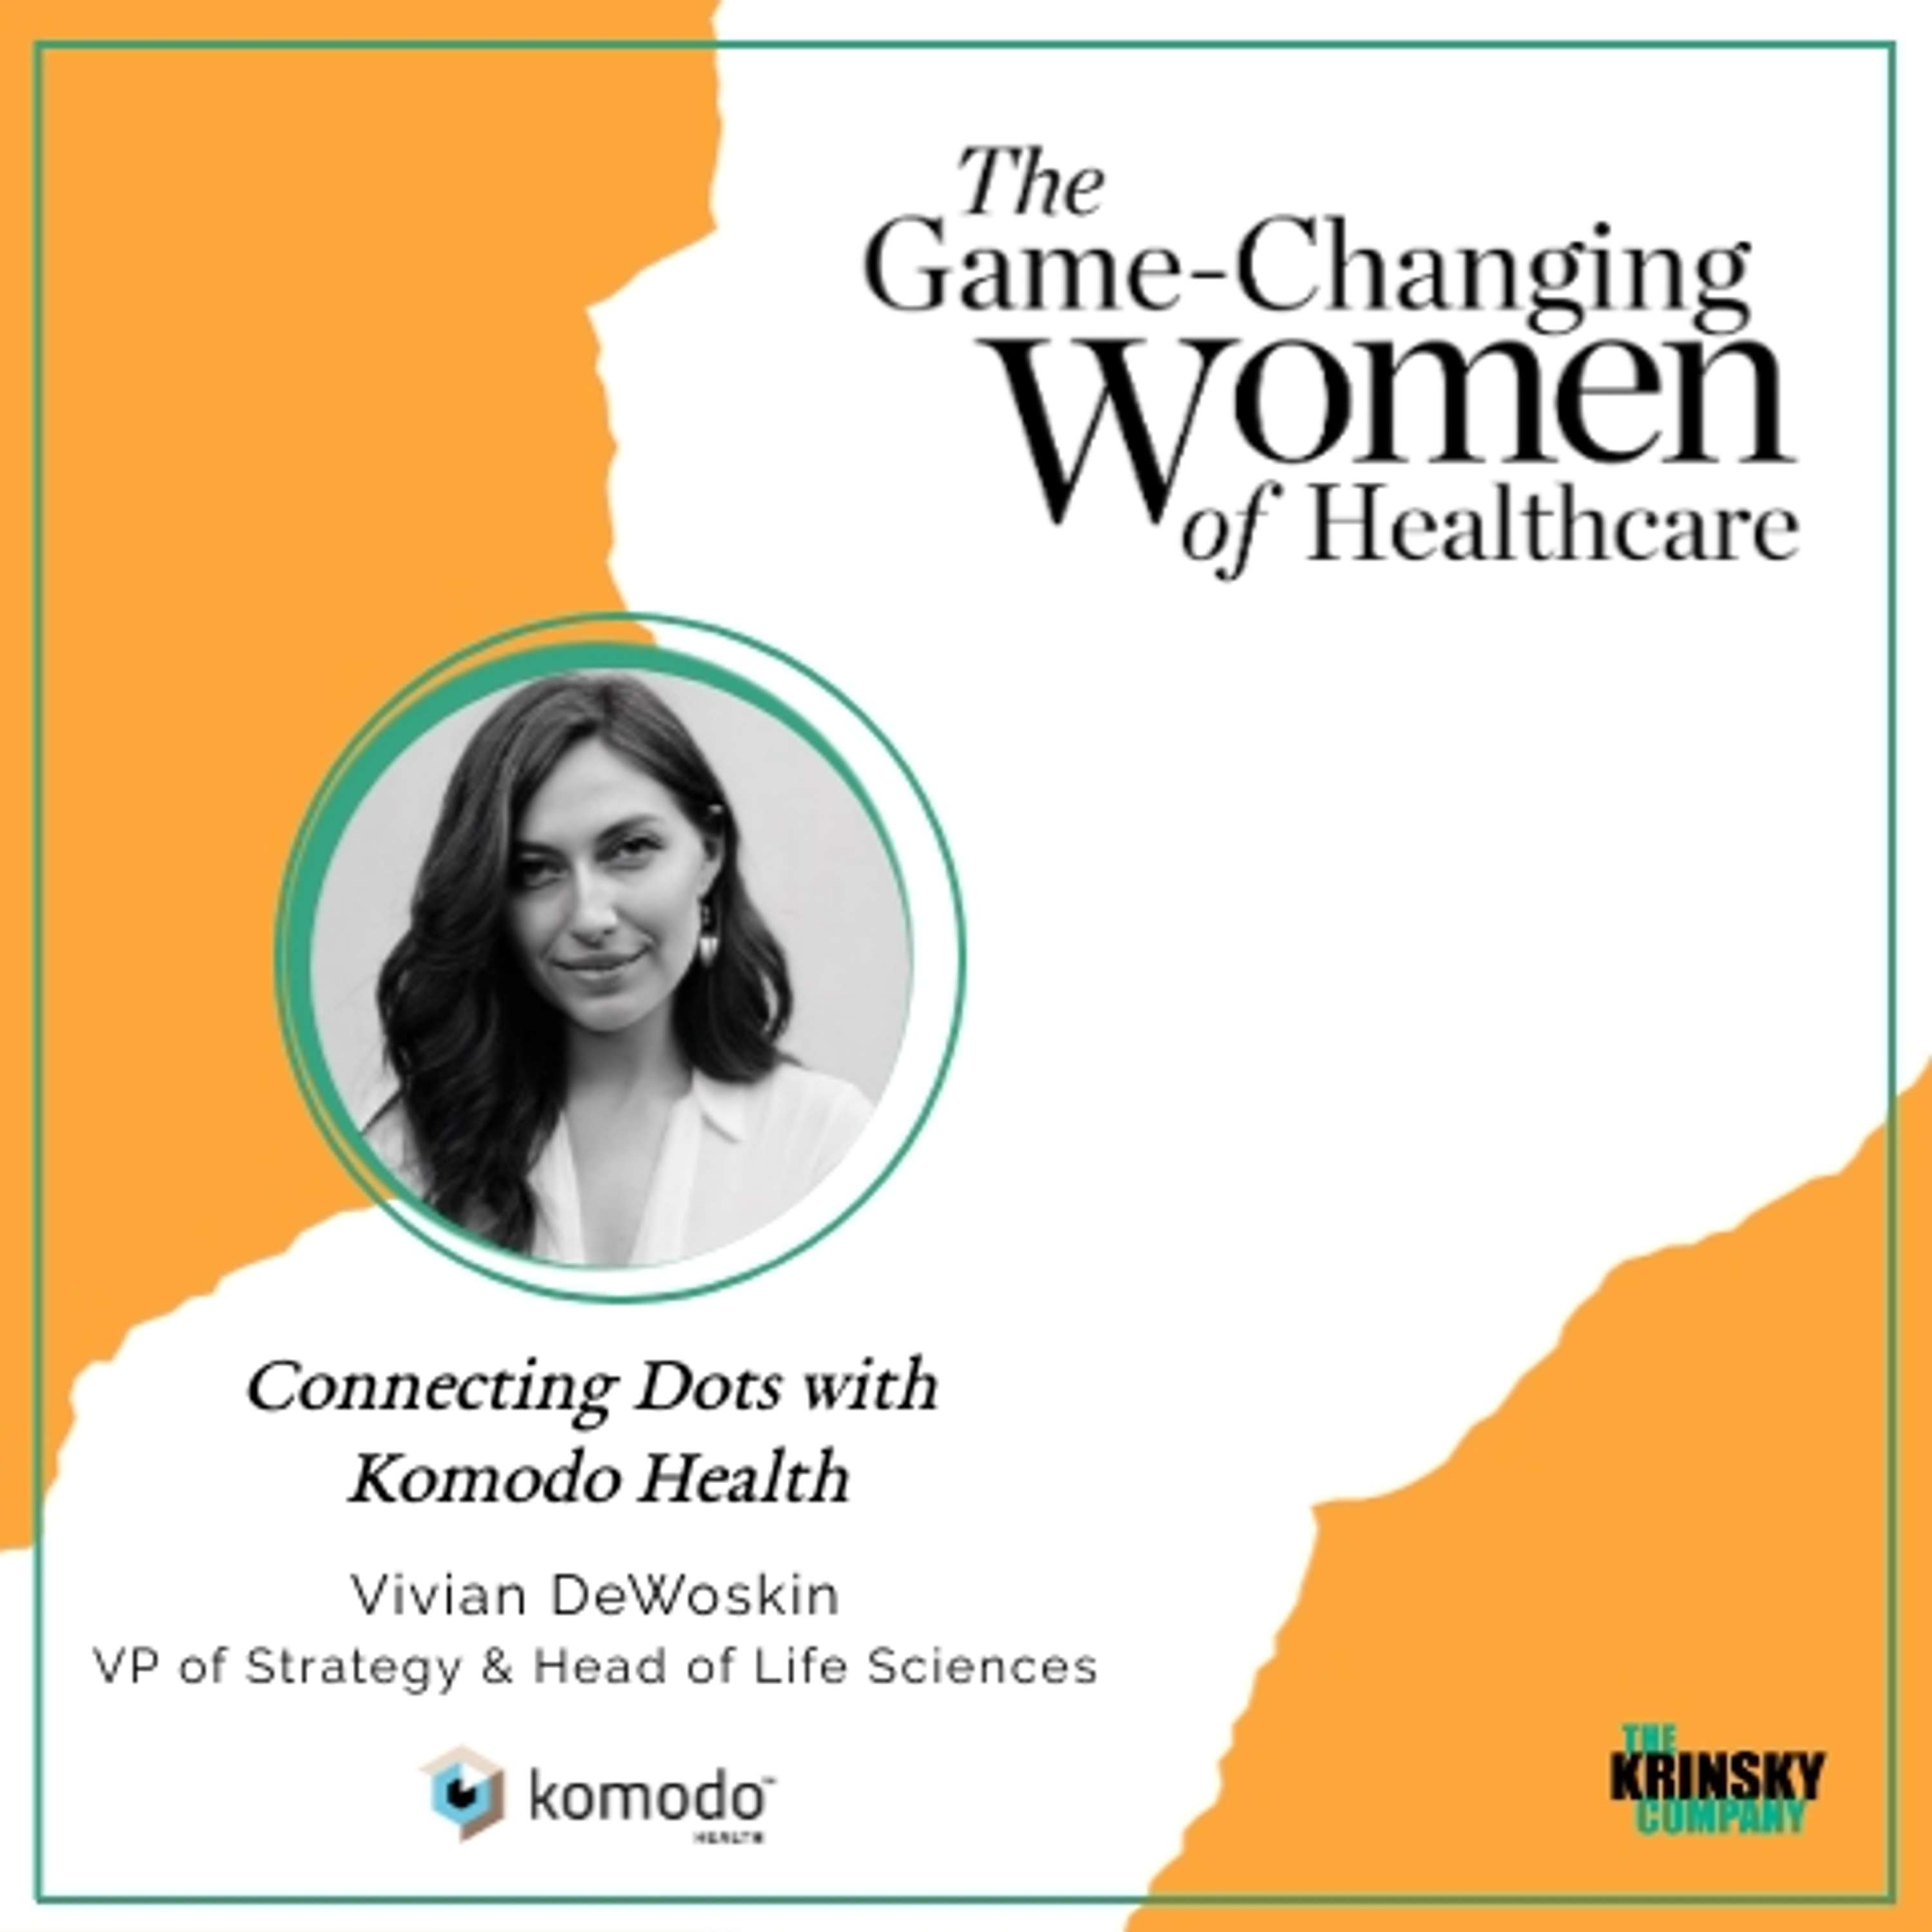 Vivian DeWoskin: Connecting Dots with Komodo Health